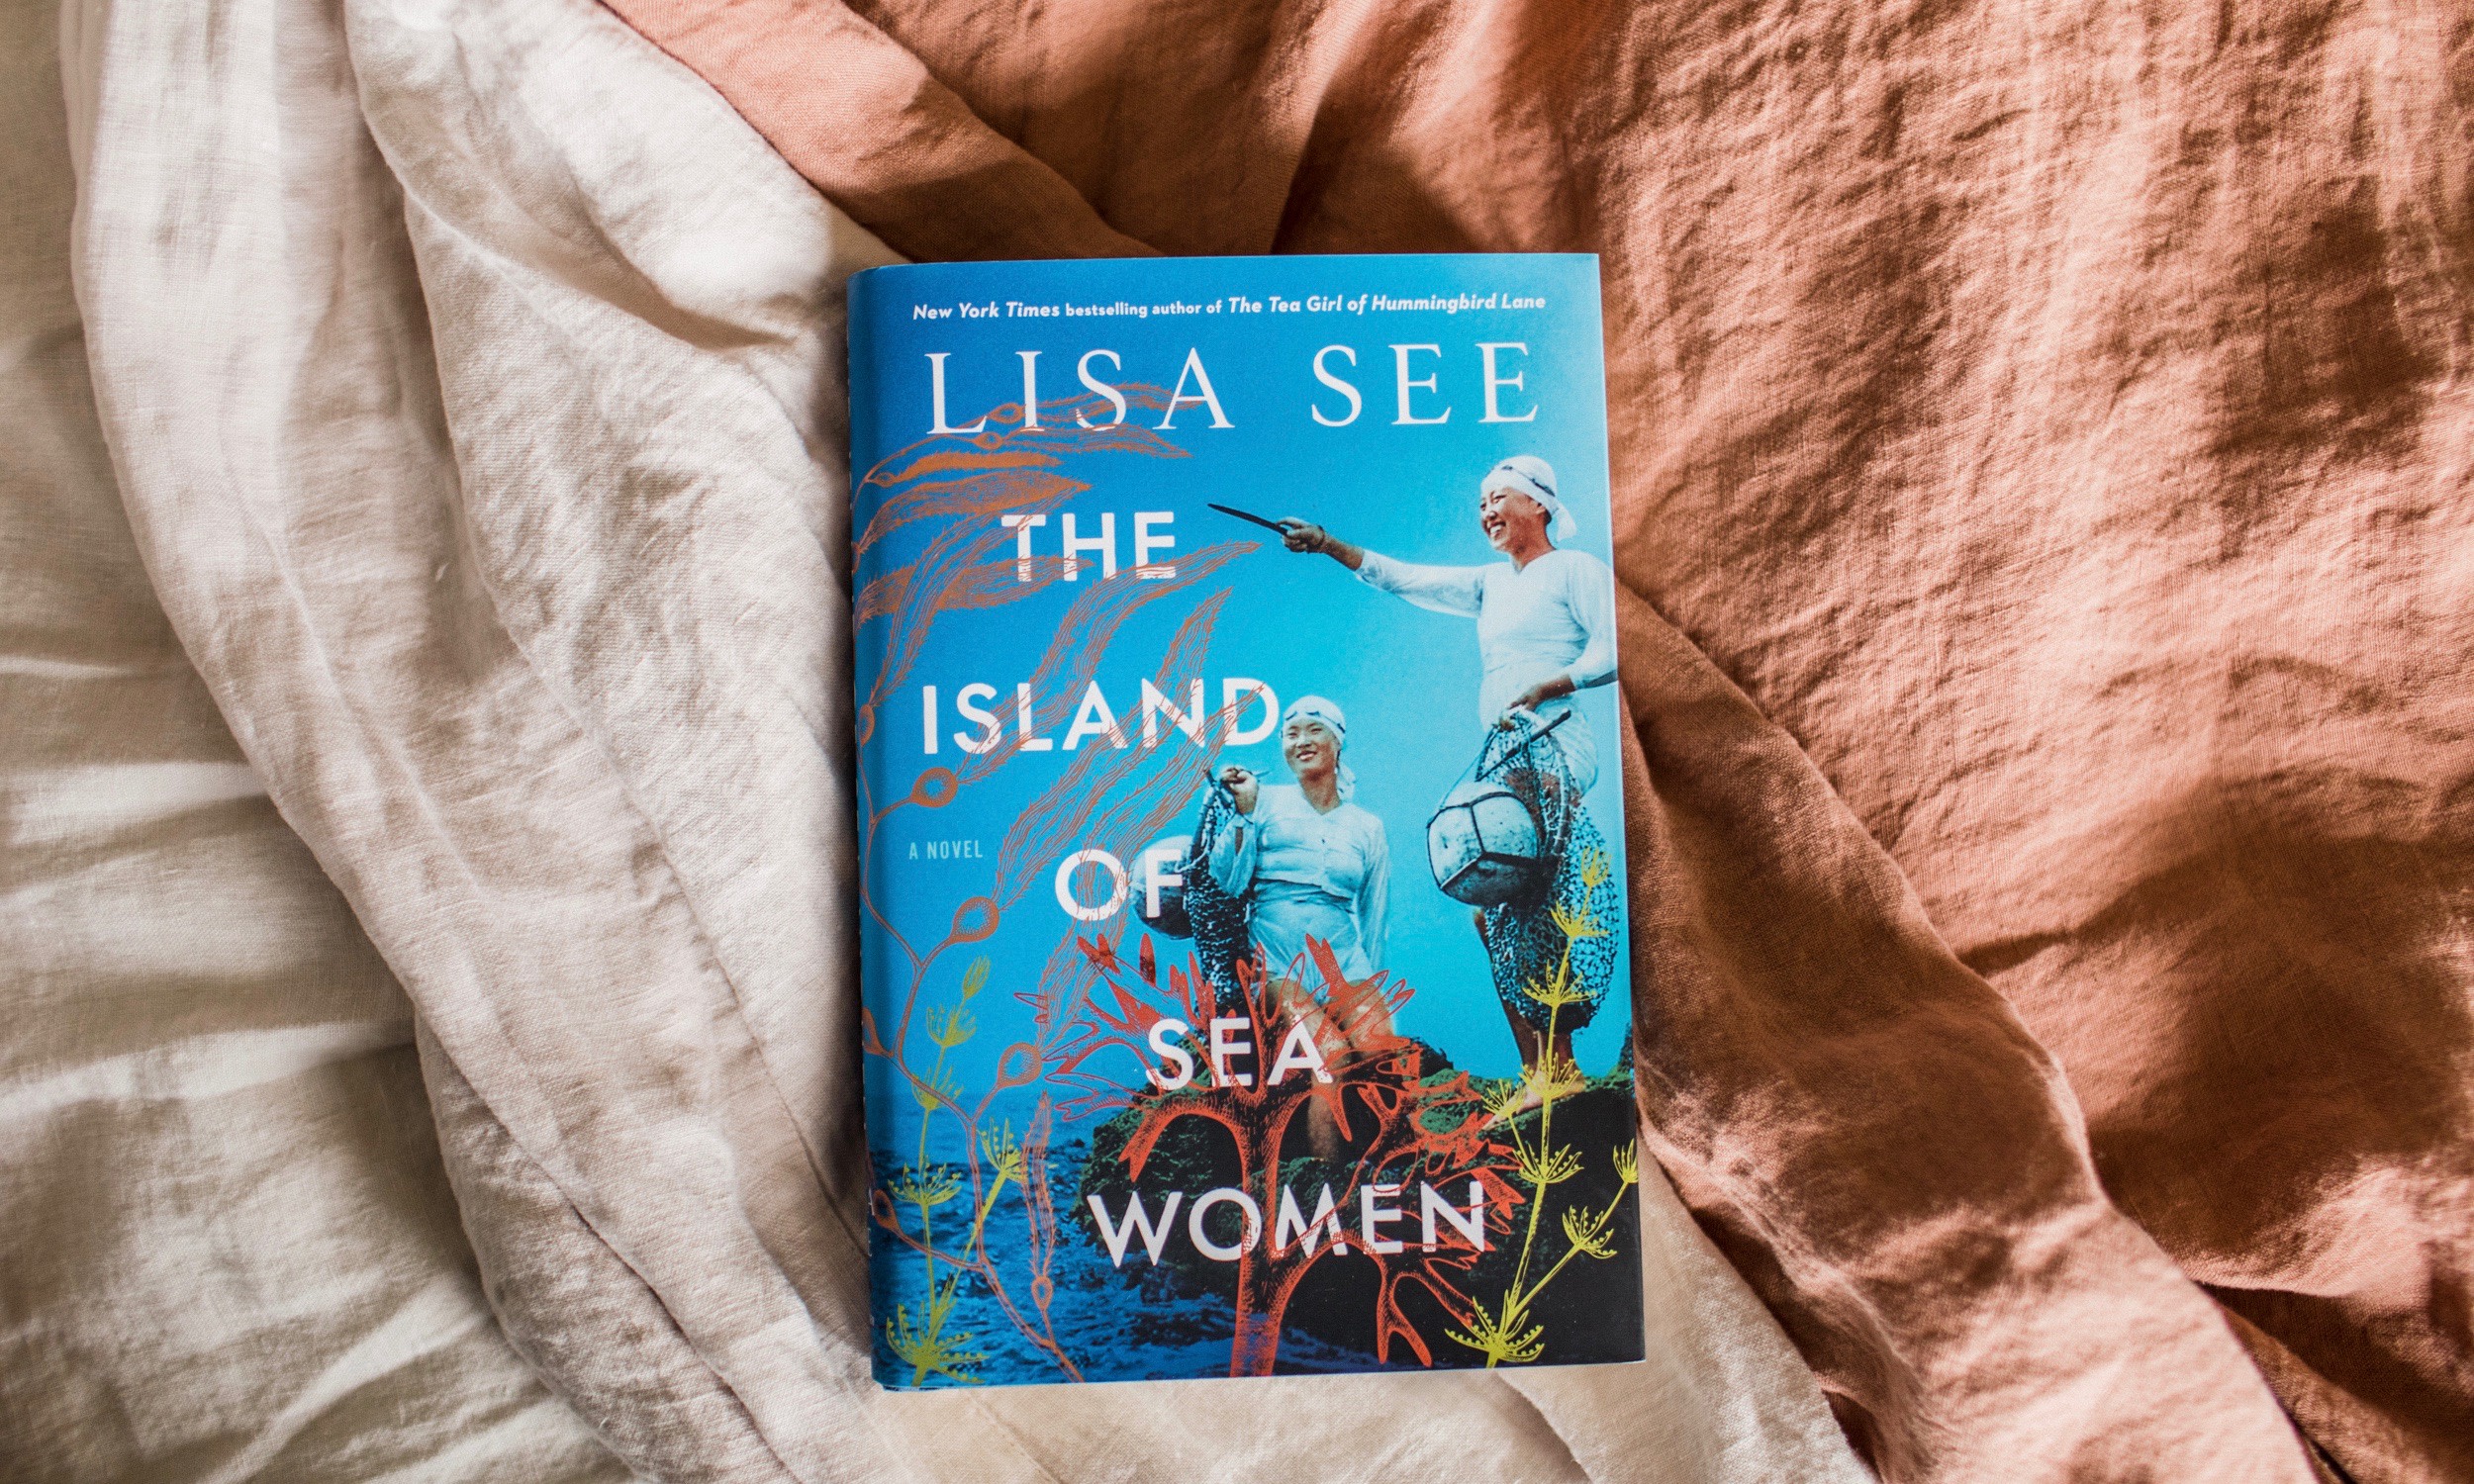 Island of sea women on linen sheets. 